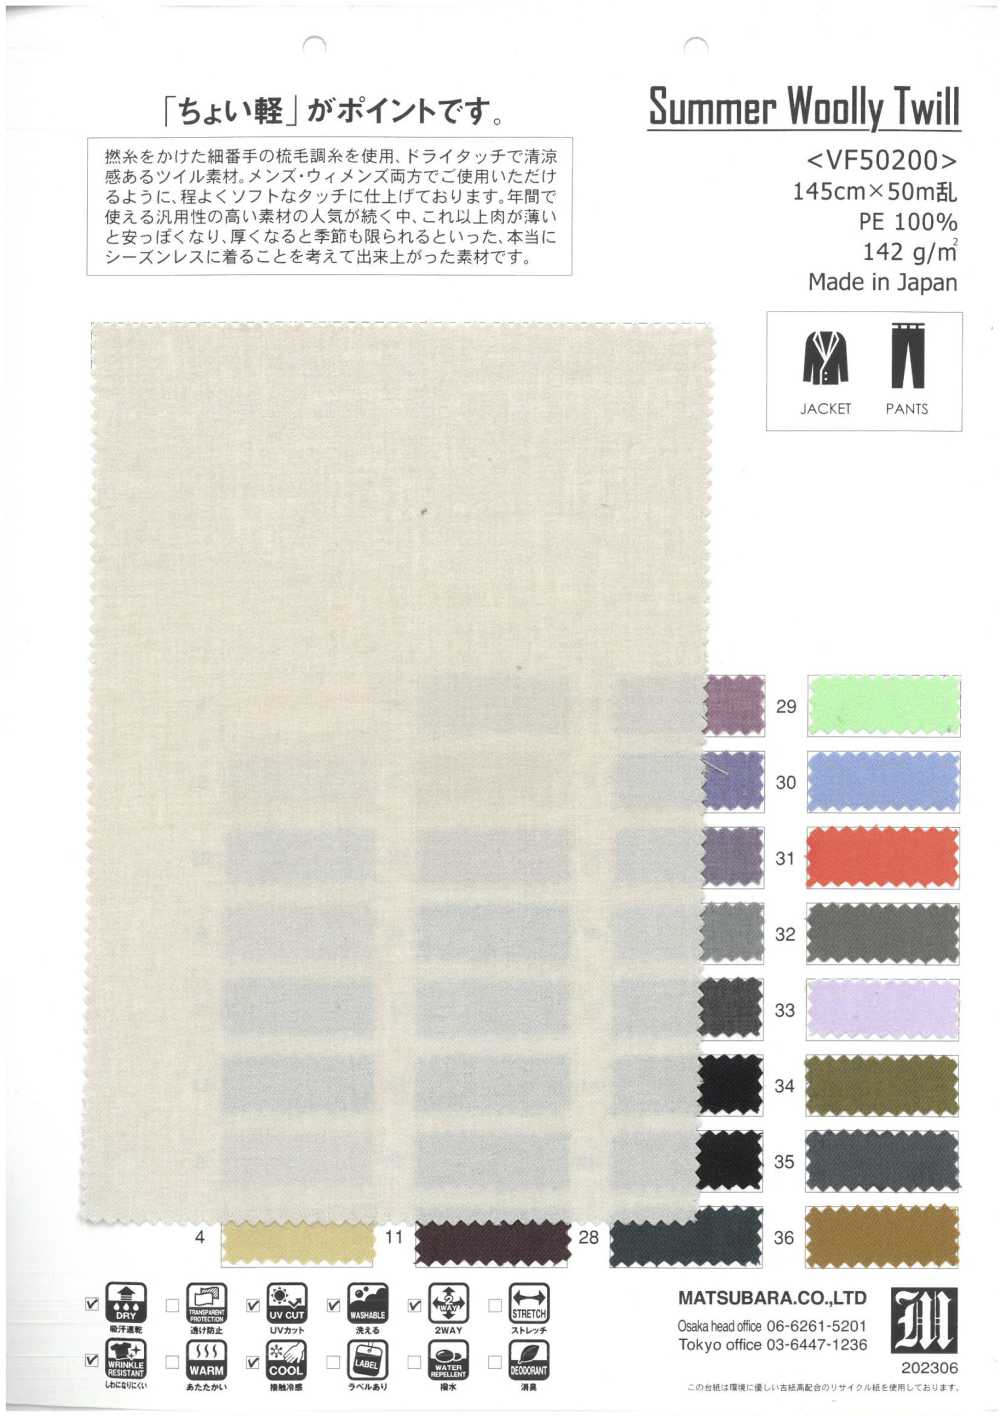 VF50200 Summer Woolly Twill[Textile / Fabric] Matsubara